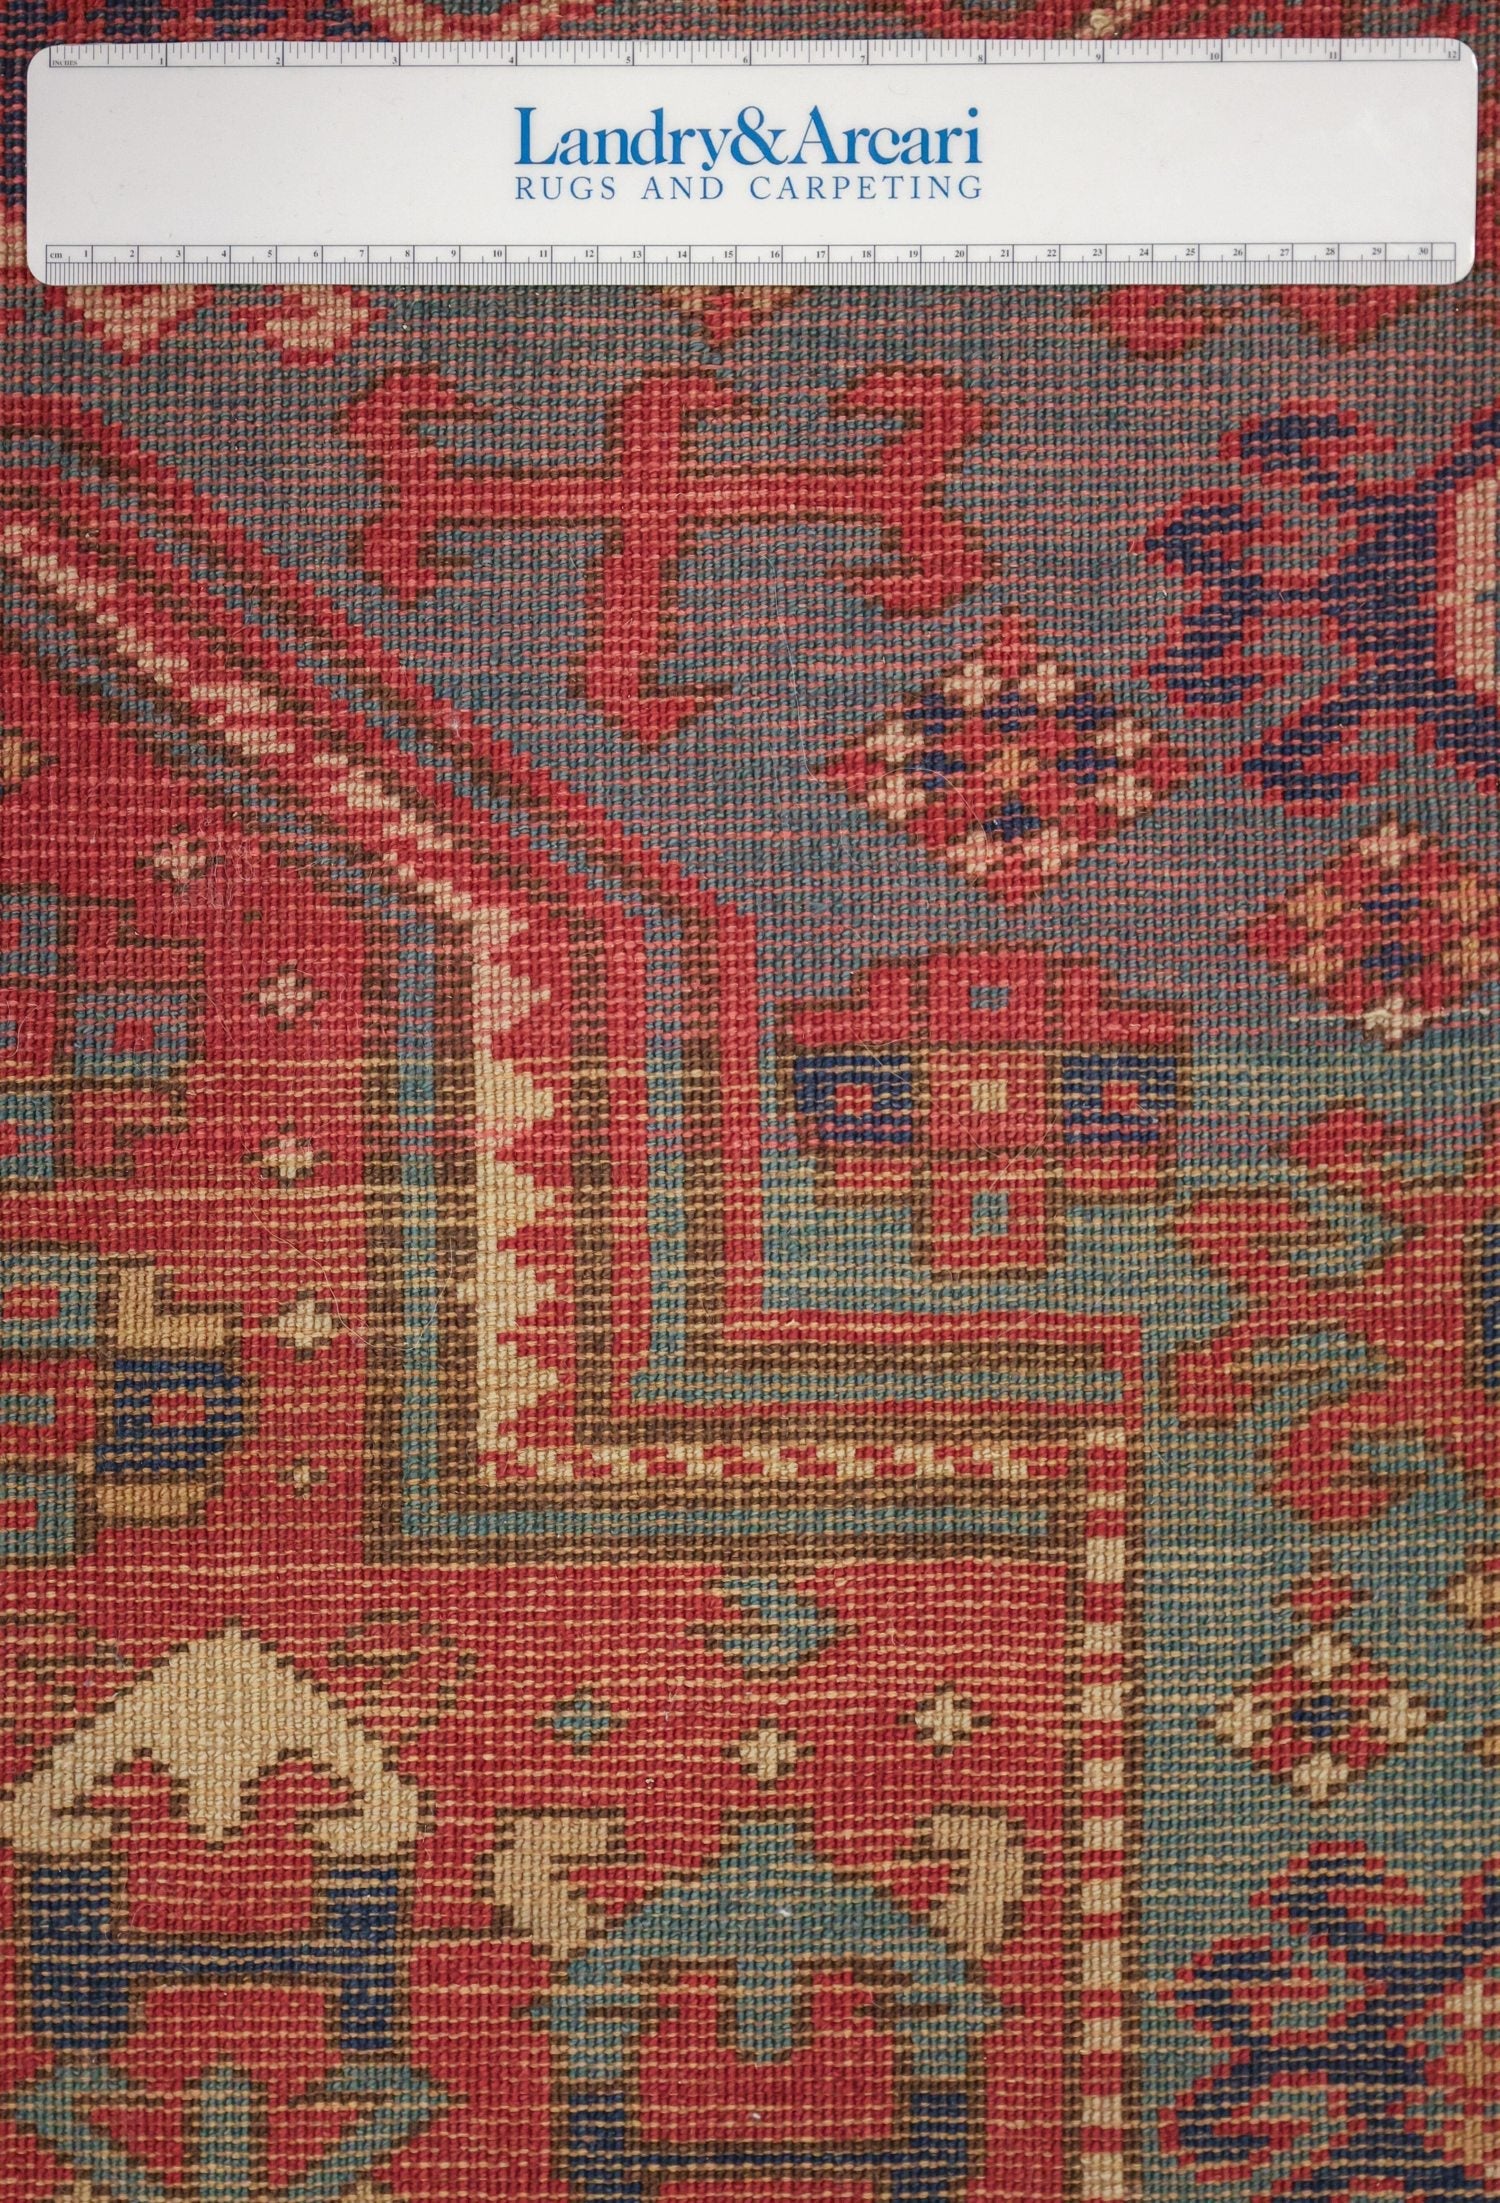 Vintage Kazak Handwoven Tribal Rug, J70034